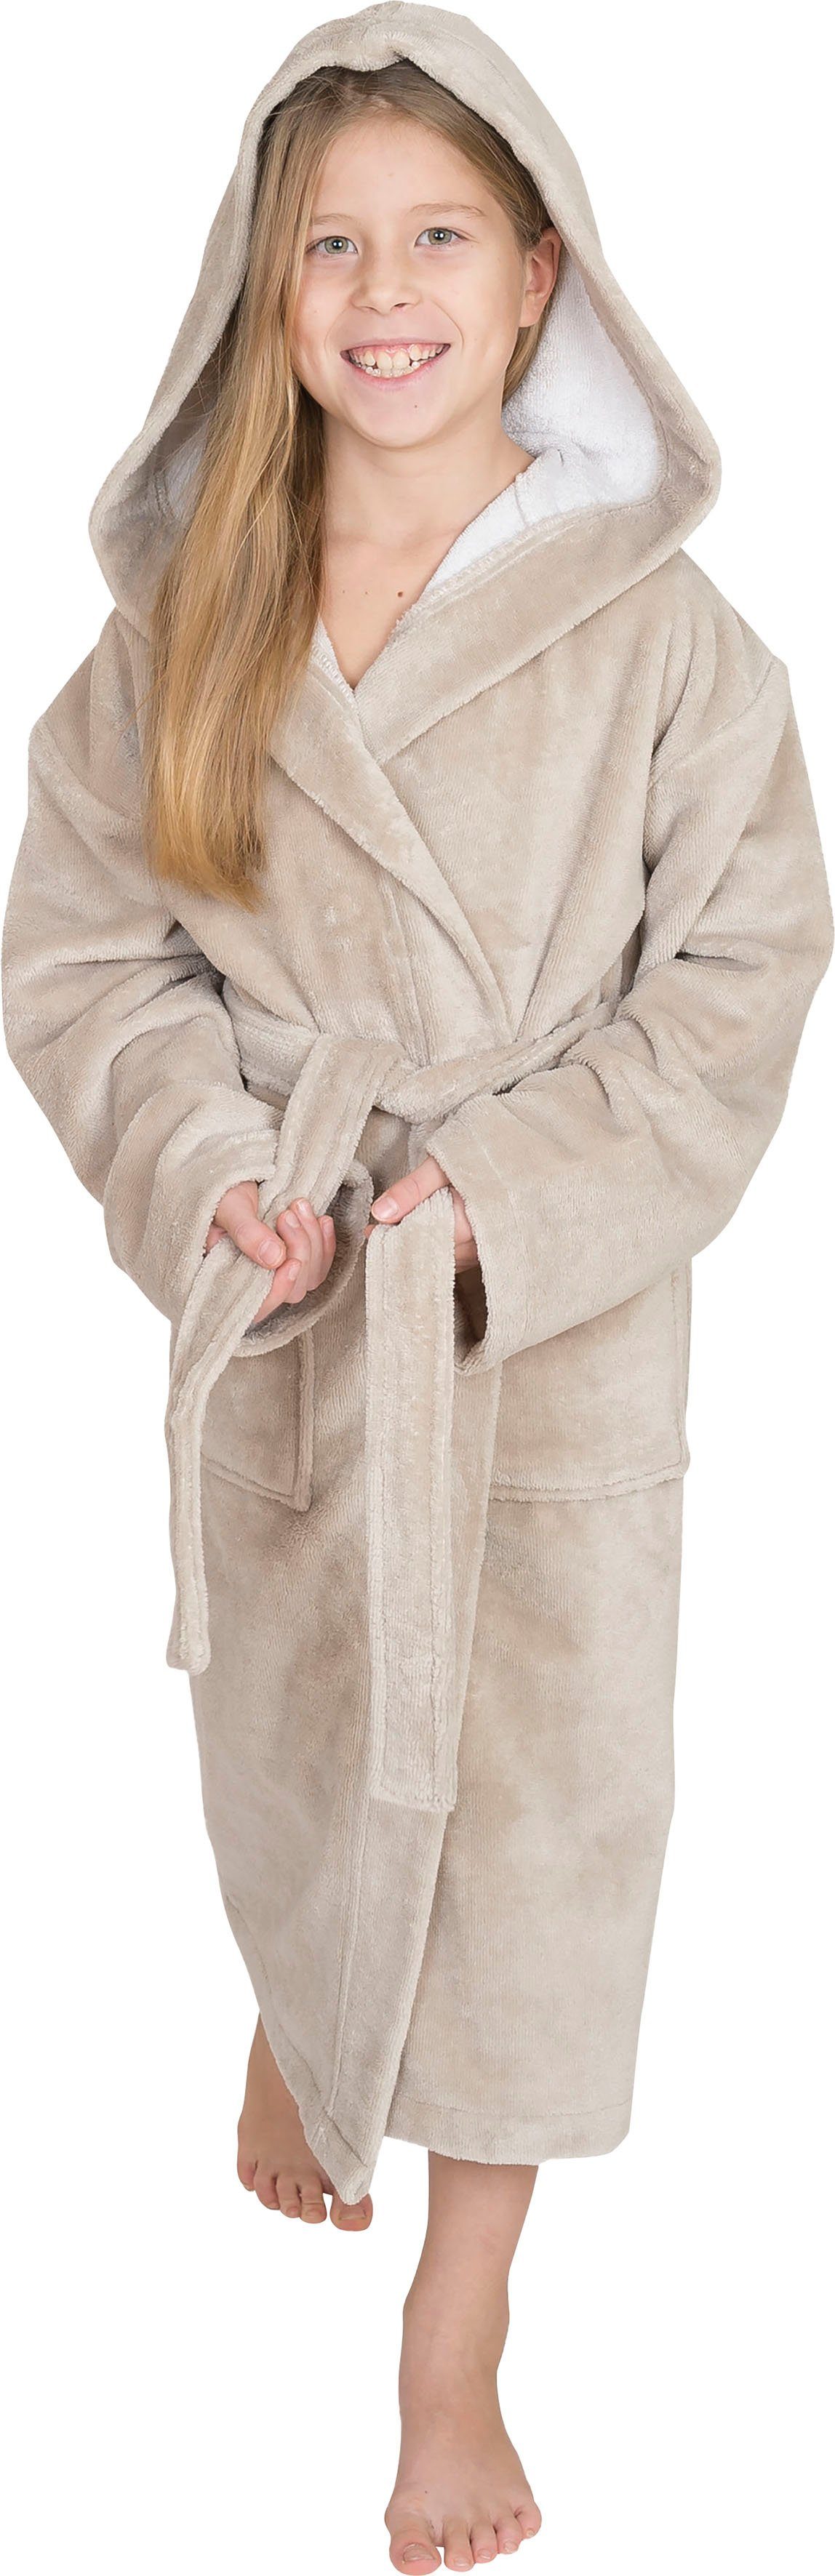 wewo fashion kinderbadjas 8521 voor meisjes  jongens, softtouch-kwaliteit (1 stuk, met riem) beige